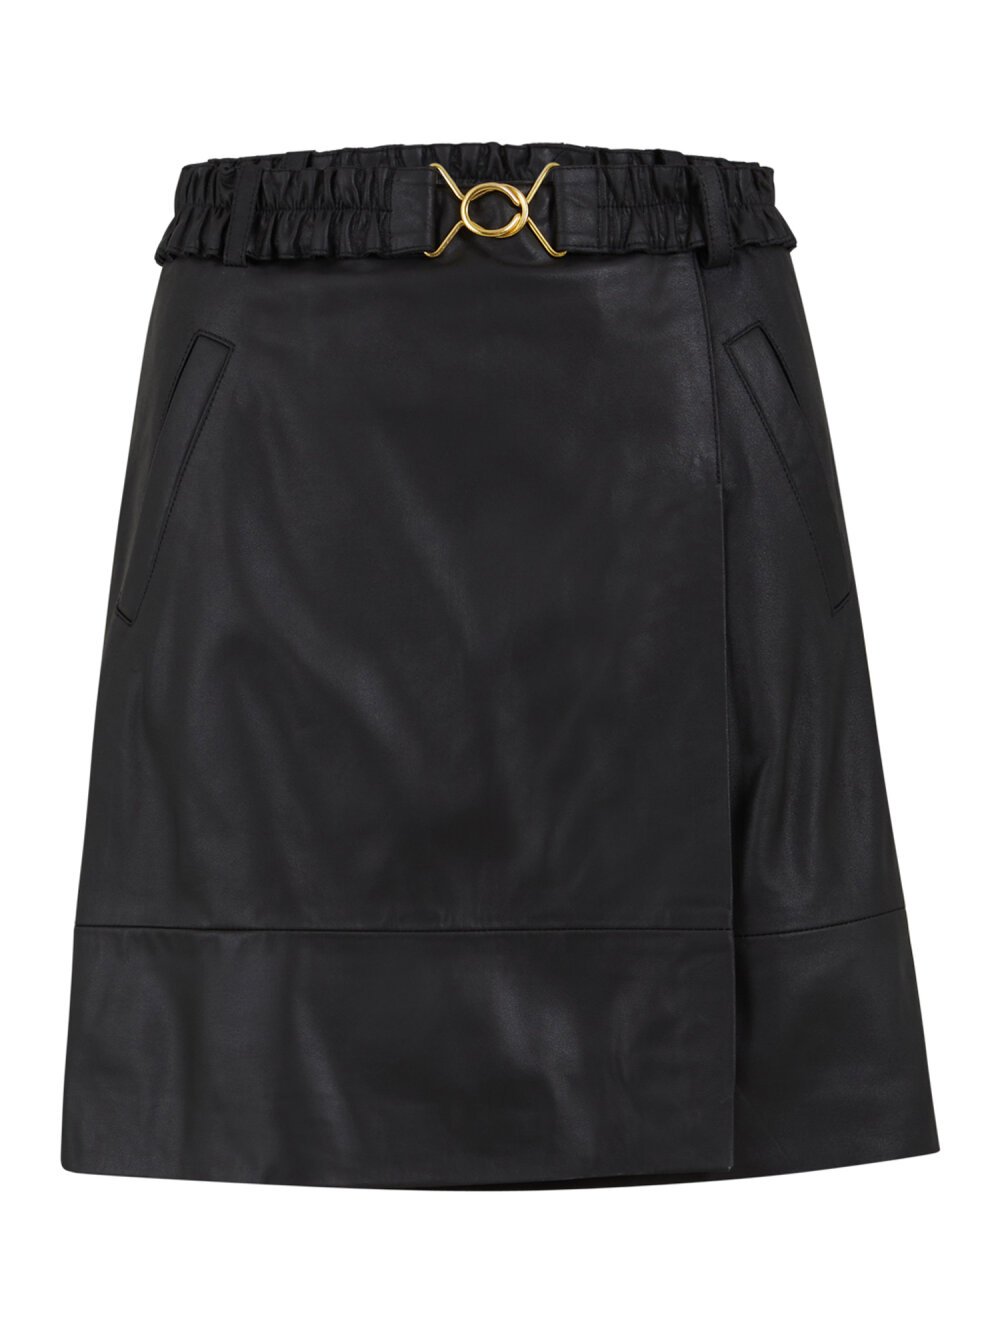 Coster Copenhagen - Leather skirt with belt